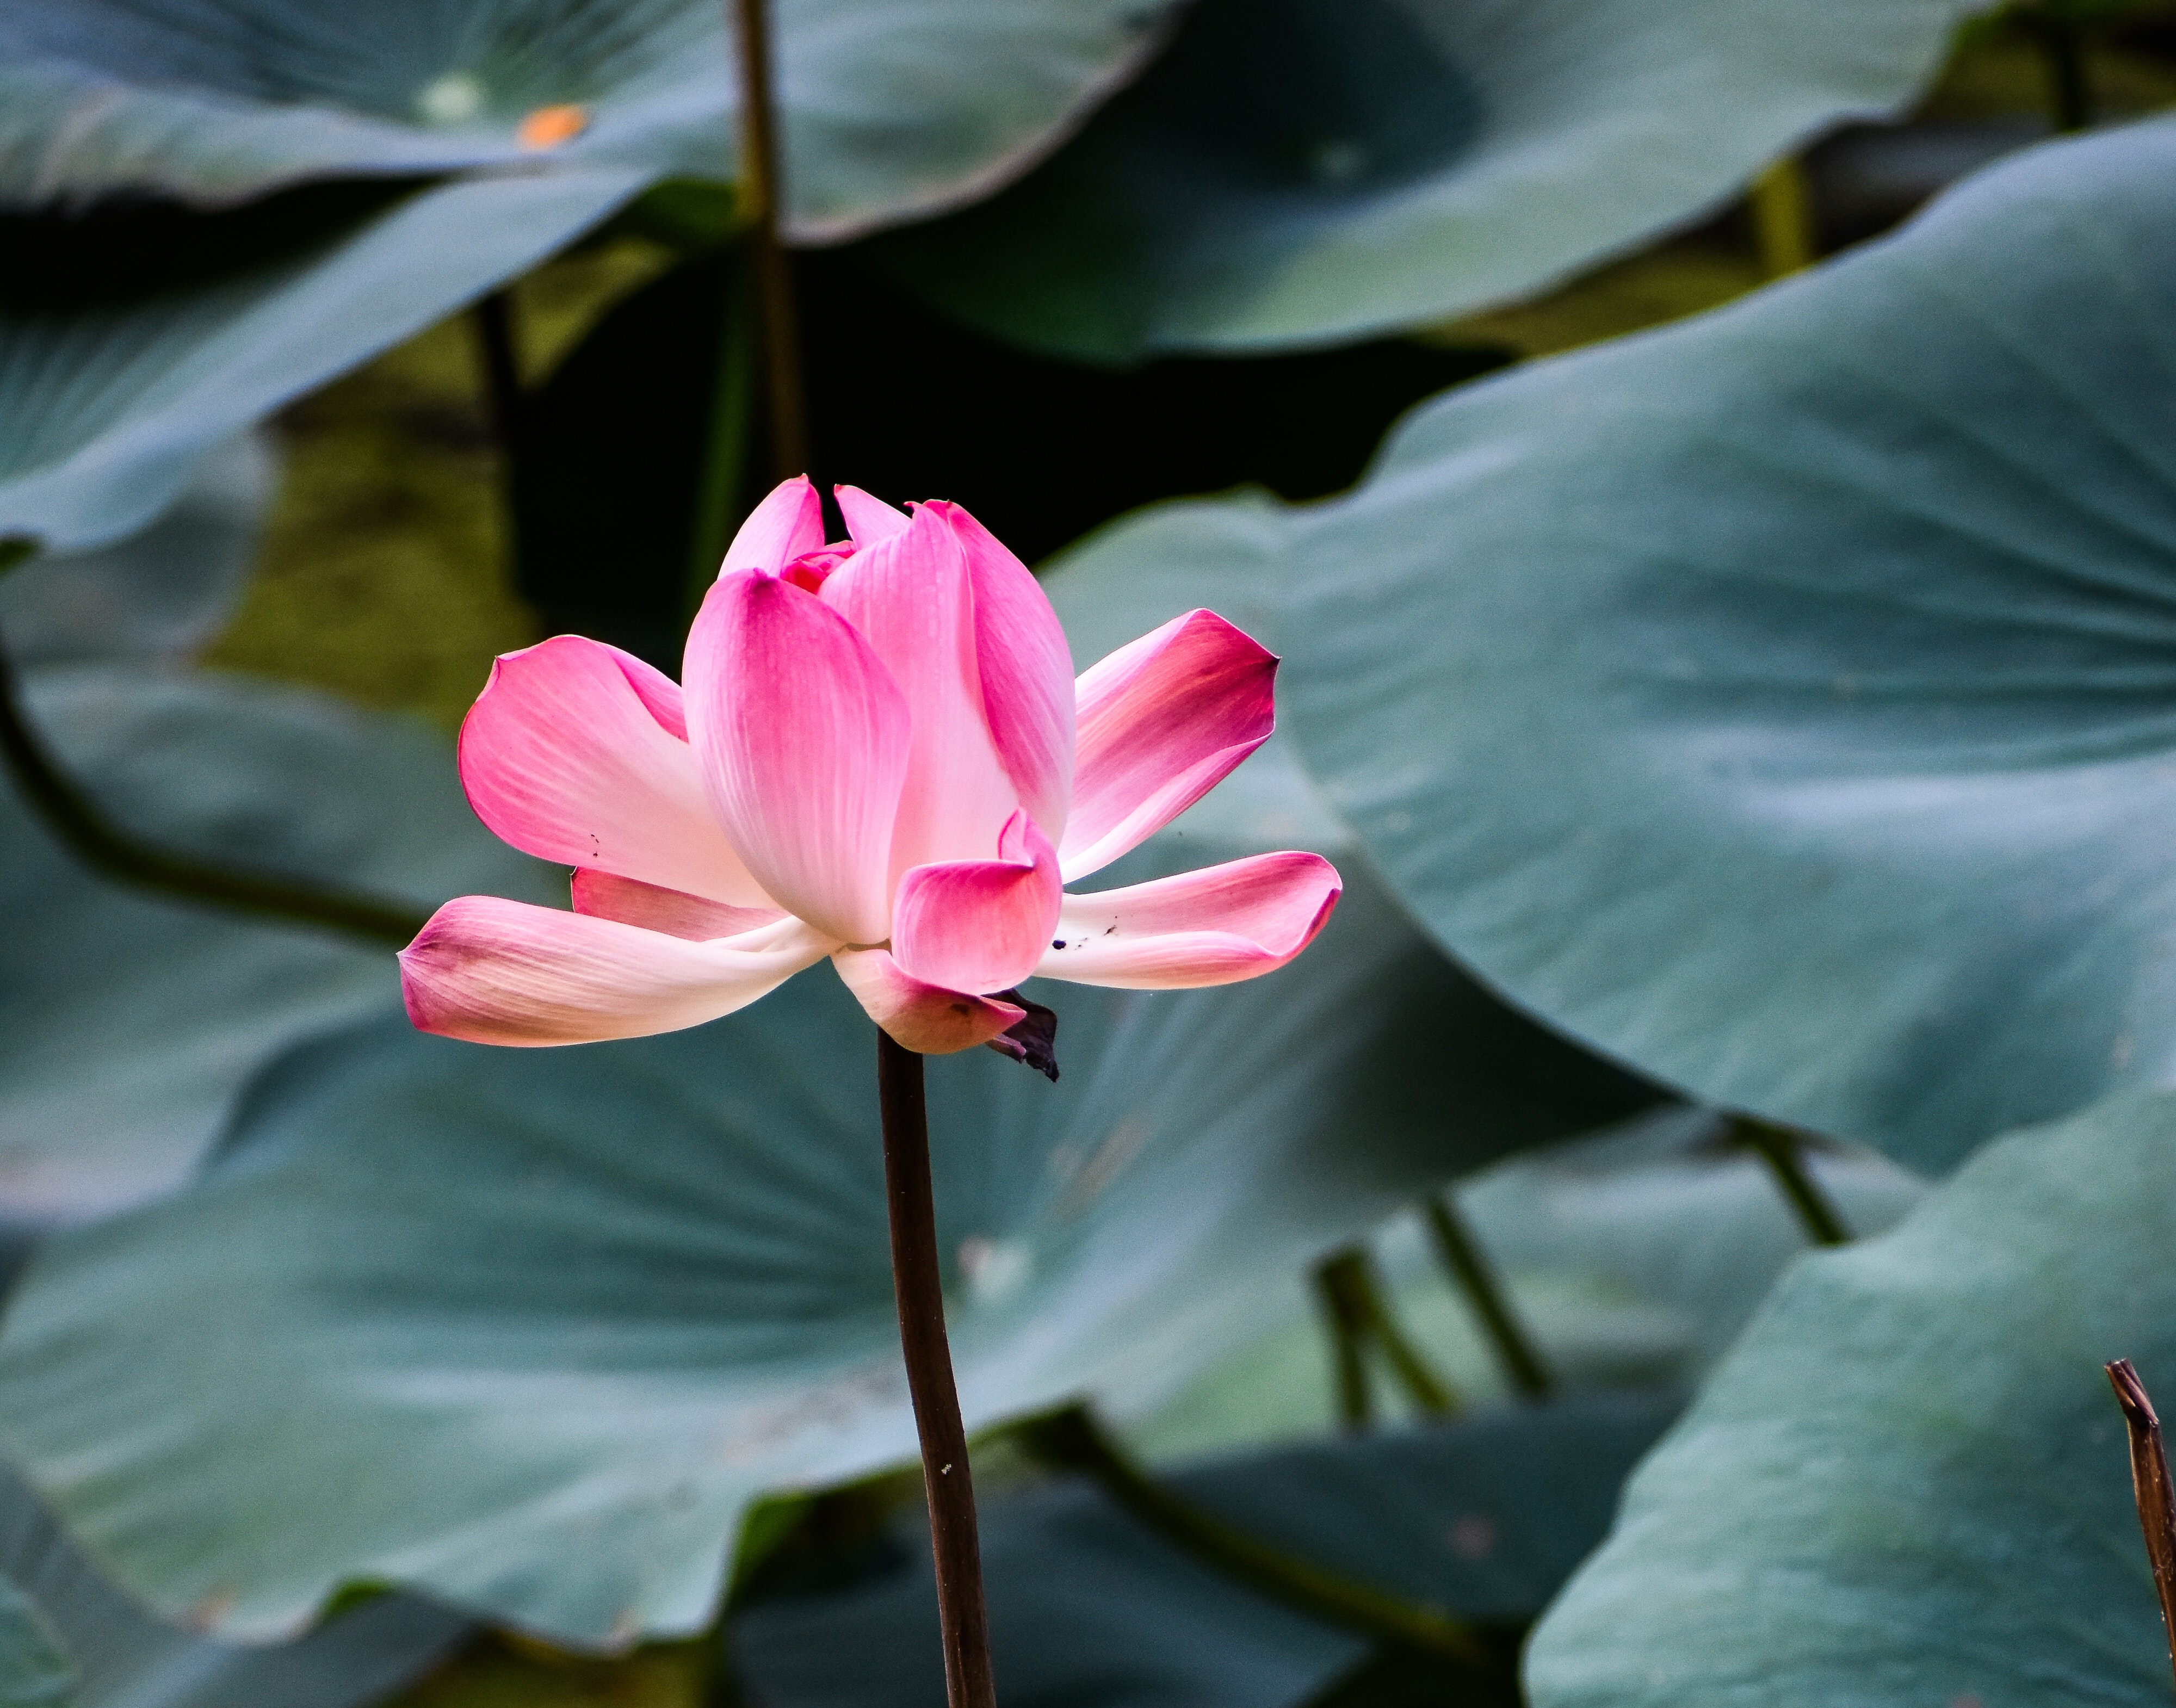 An image of pink lotus flower blooming beautifully in water